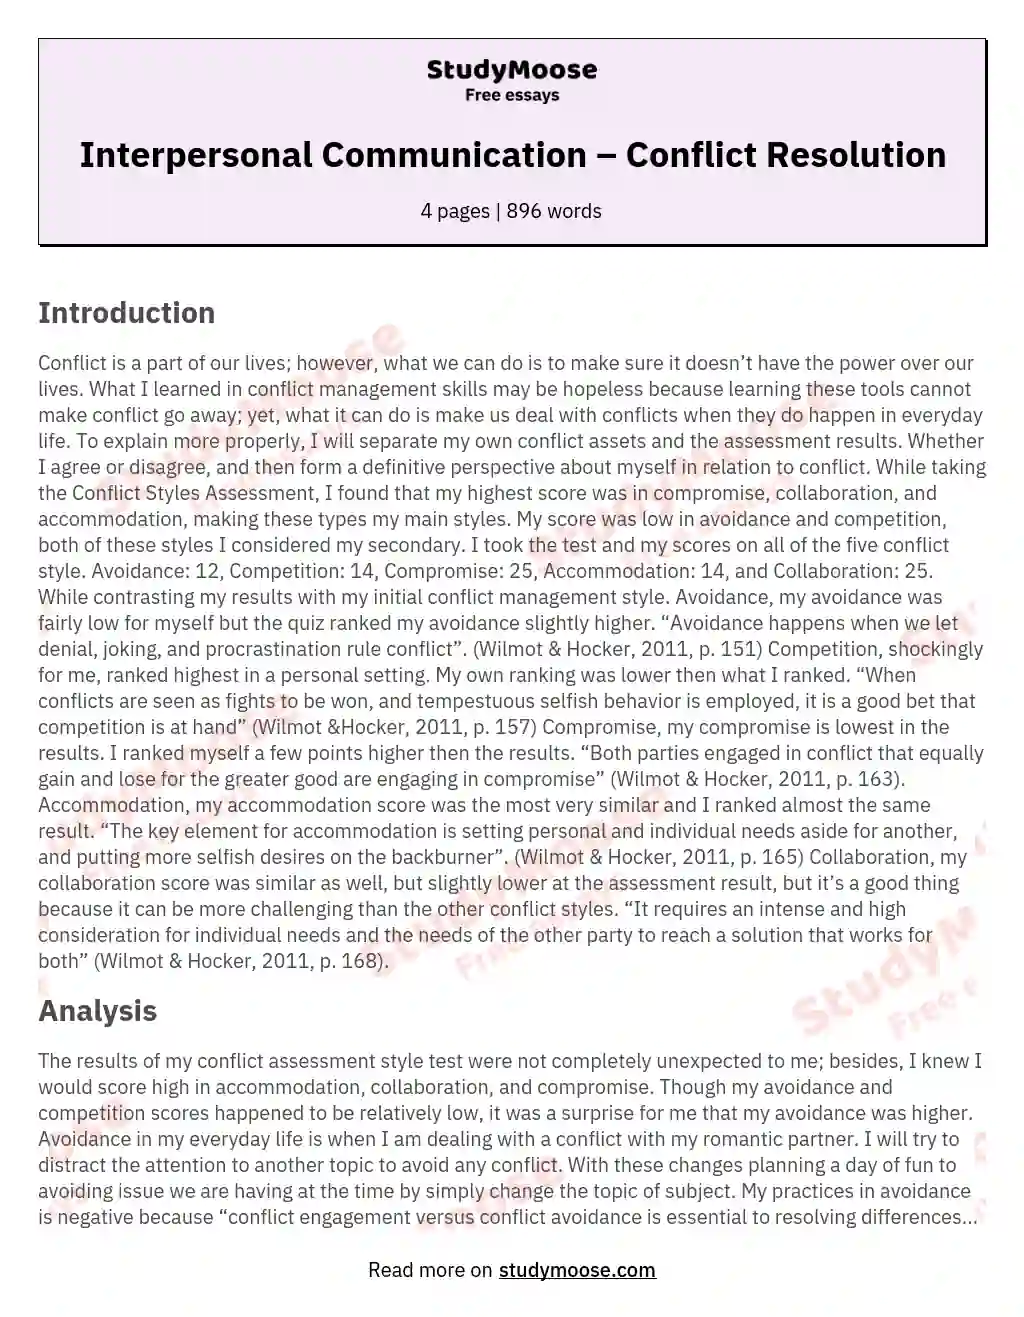 Interpersonal Communication – Conflict Resolution essay